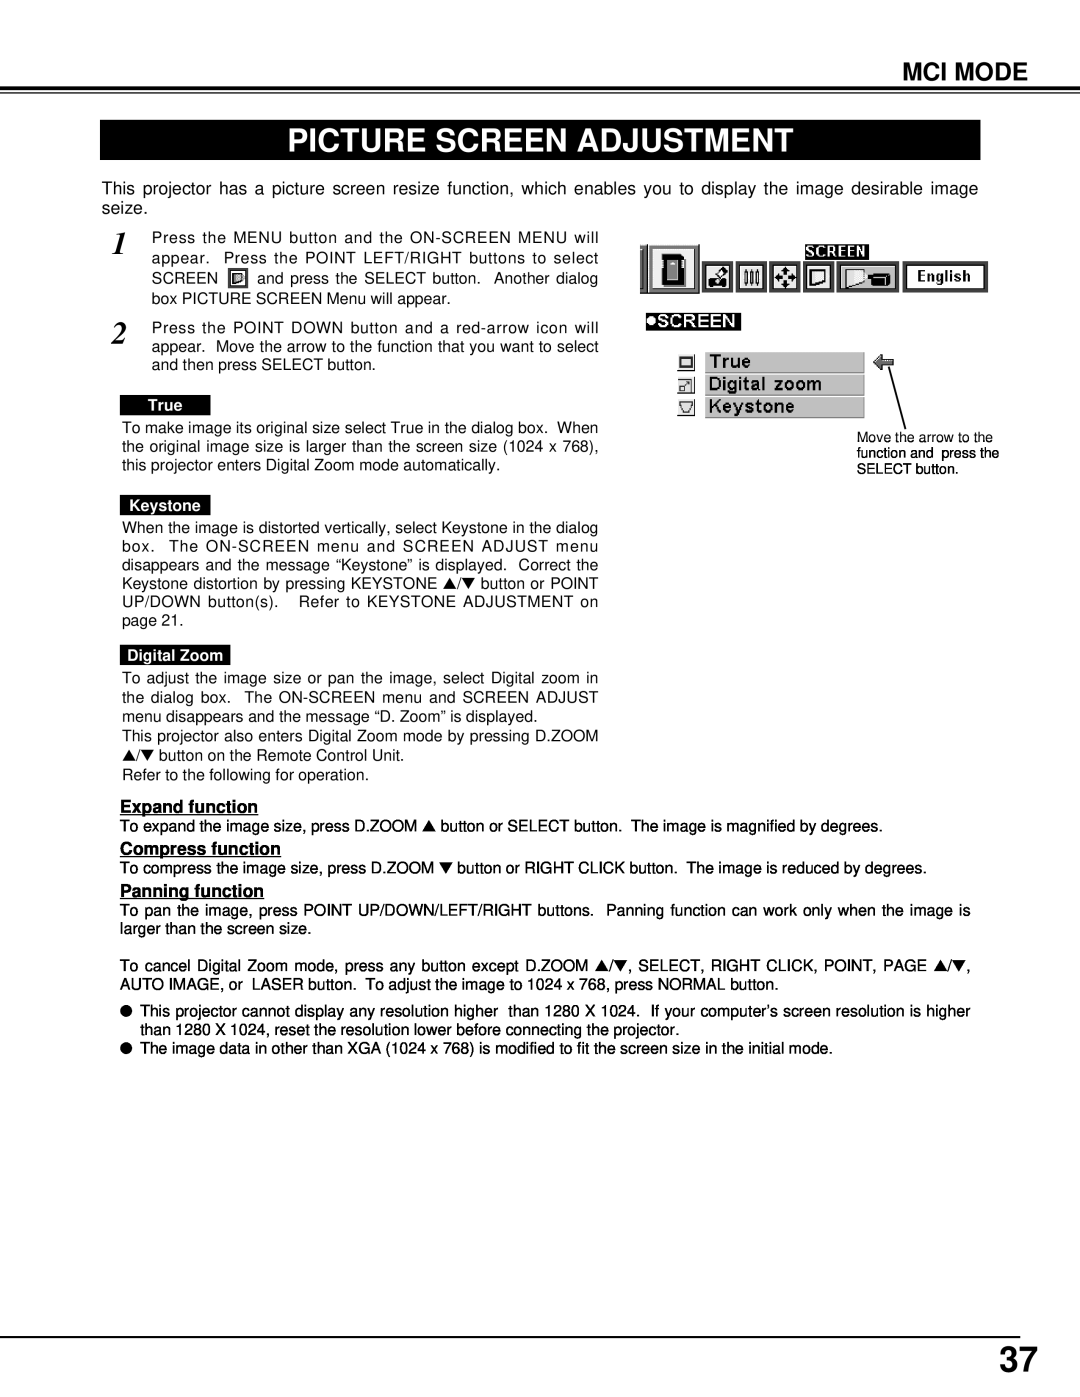 BOXLIGHT CP-33t manual Picture Screen Adjustment, Mci Mode, True, Keystone, Digital Zoom 